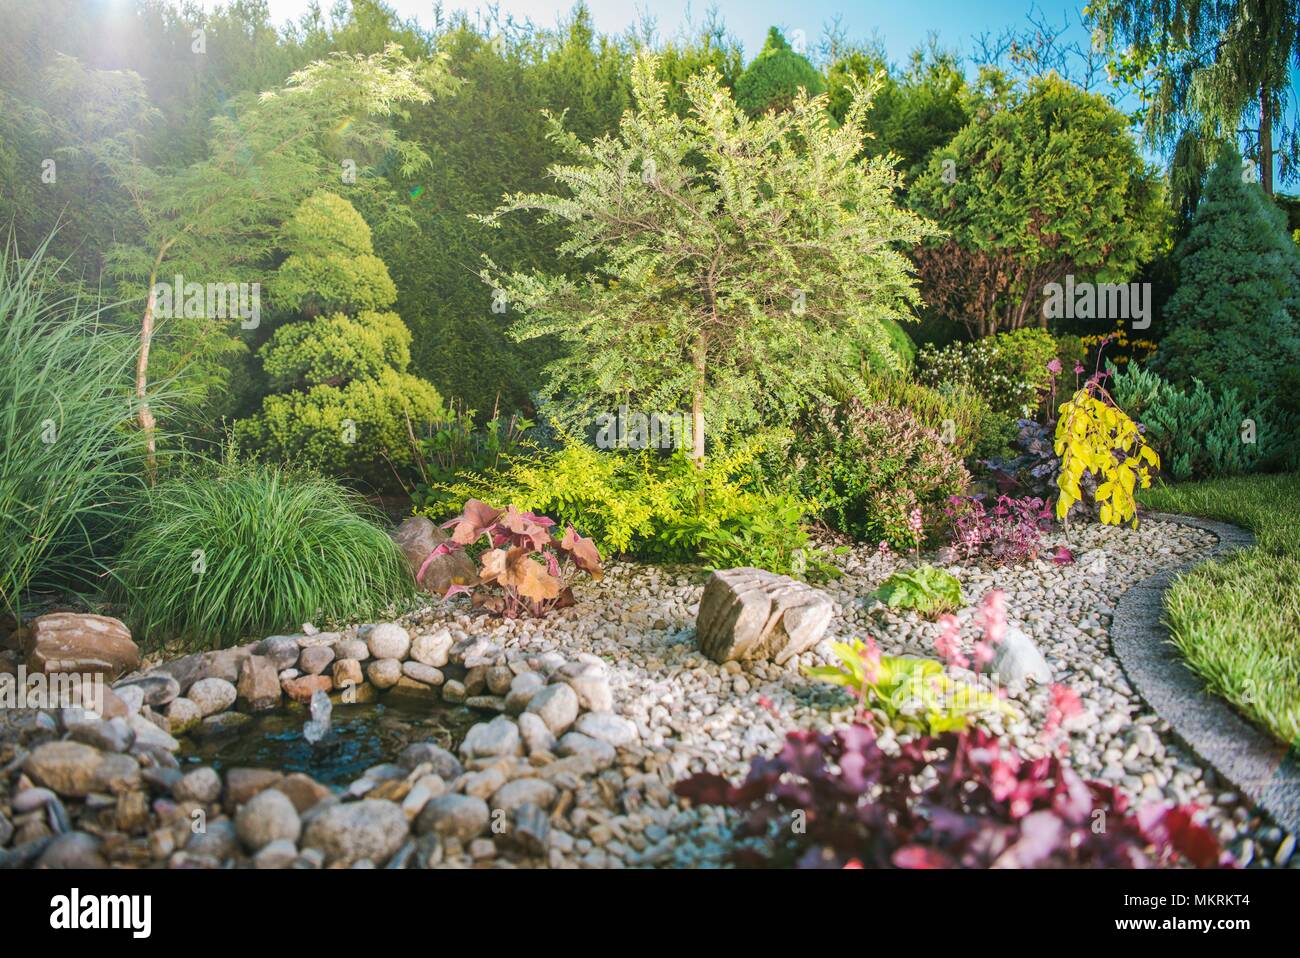 Creative Backyard Garden Full of Colorful Plants. Gardening Theme. Stock Photo